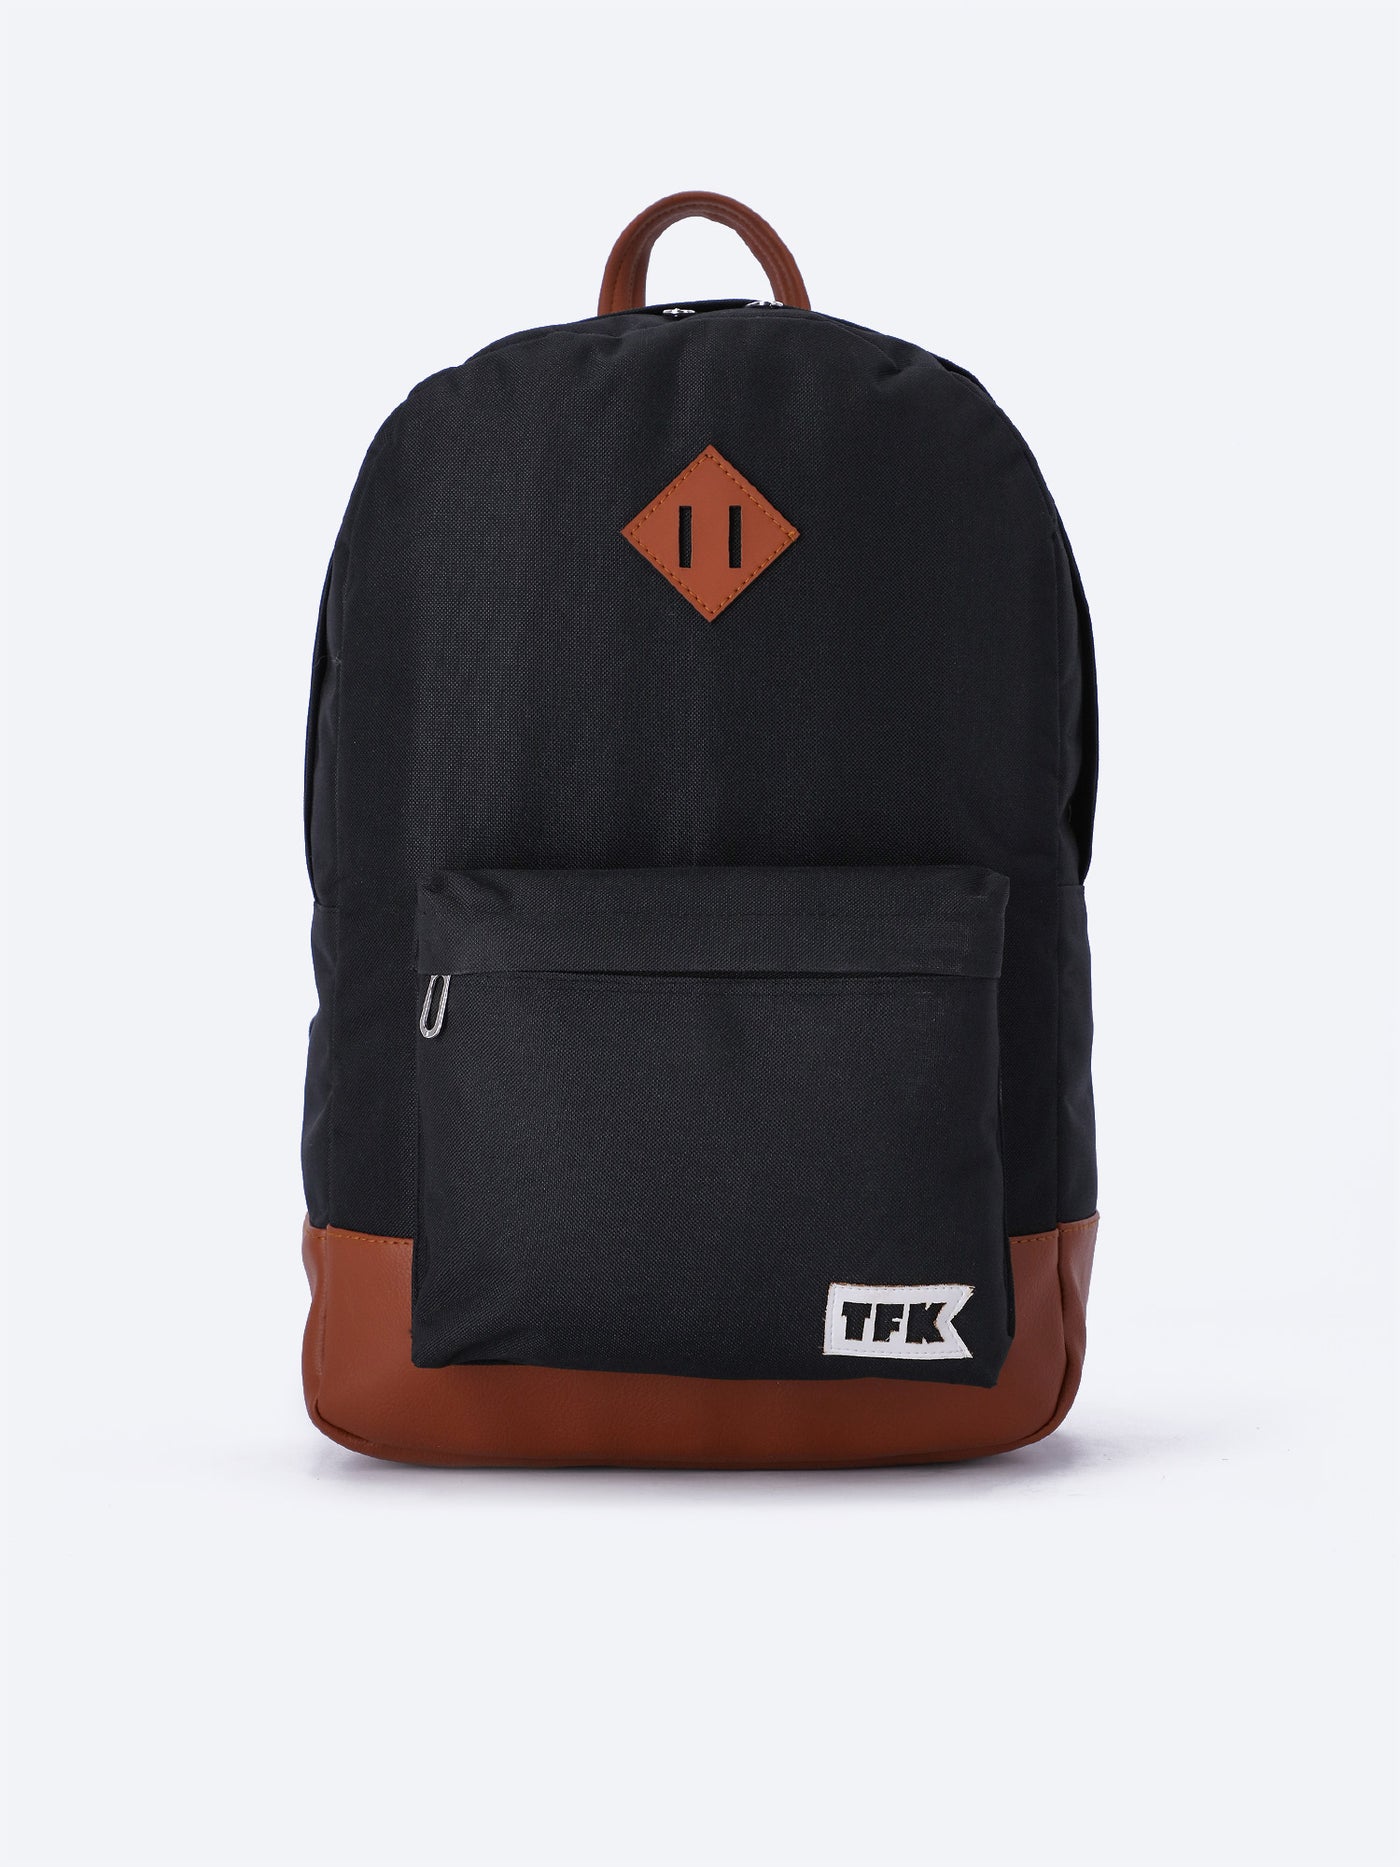 Life Surfer Backpack - Stylish Design